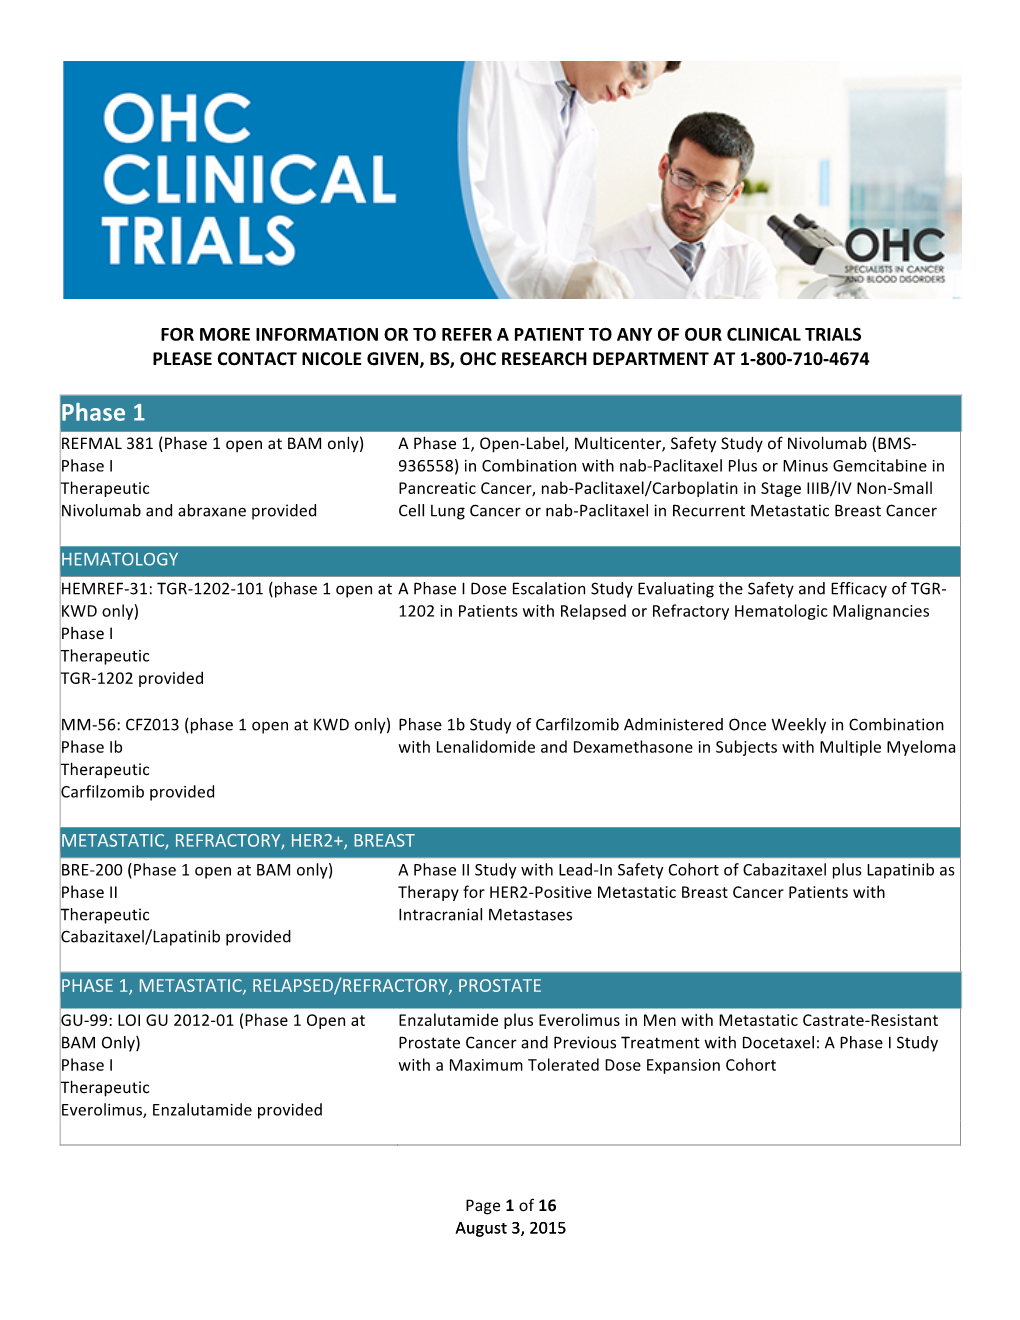 OHC Clinical Trials List 080315